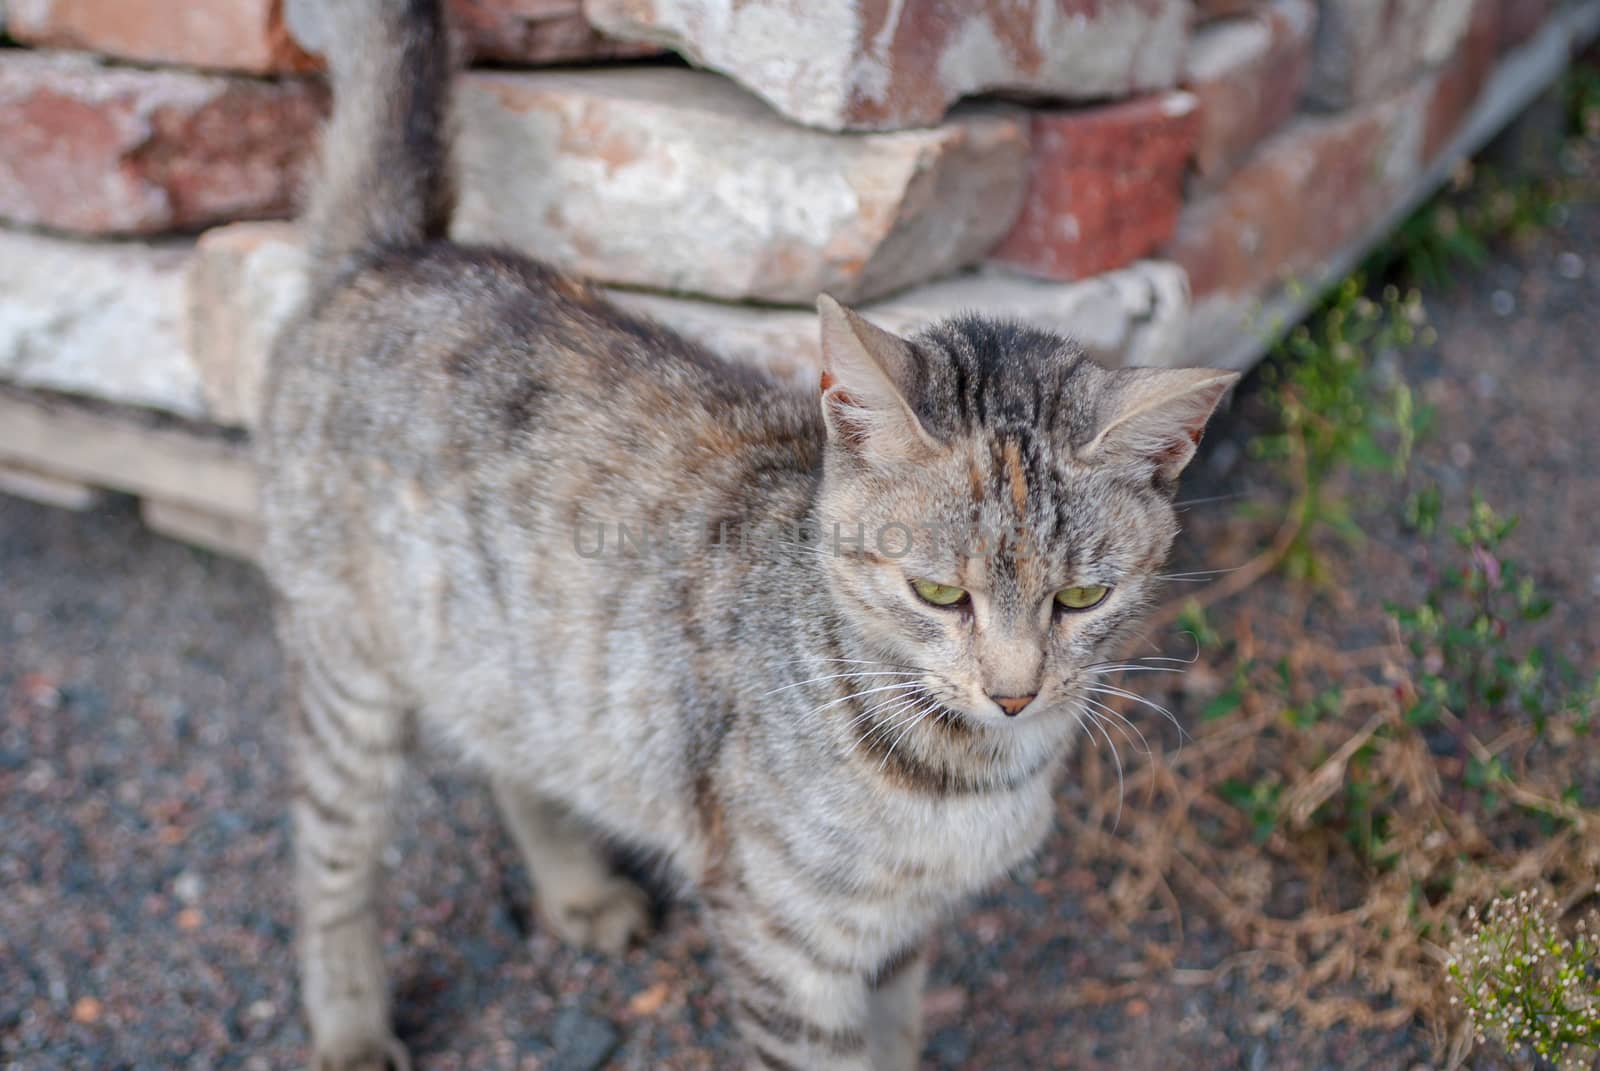 striped cat on the street, street cat by uvisni